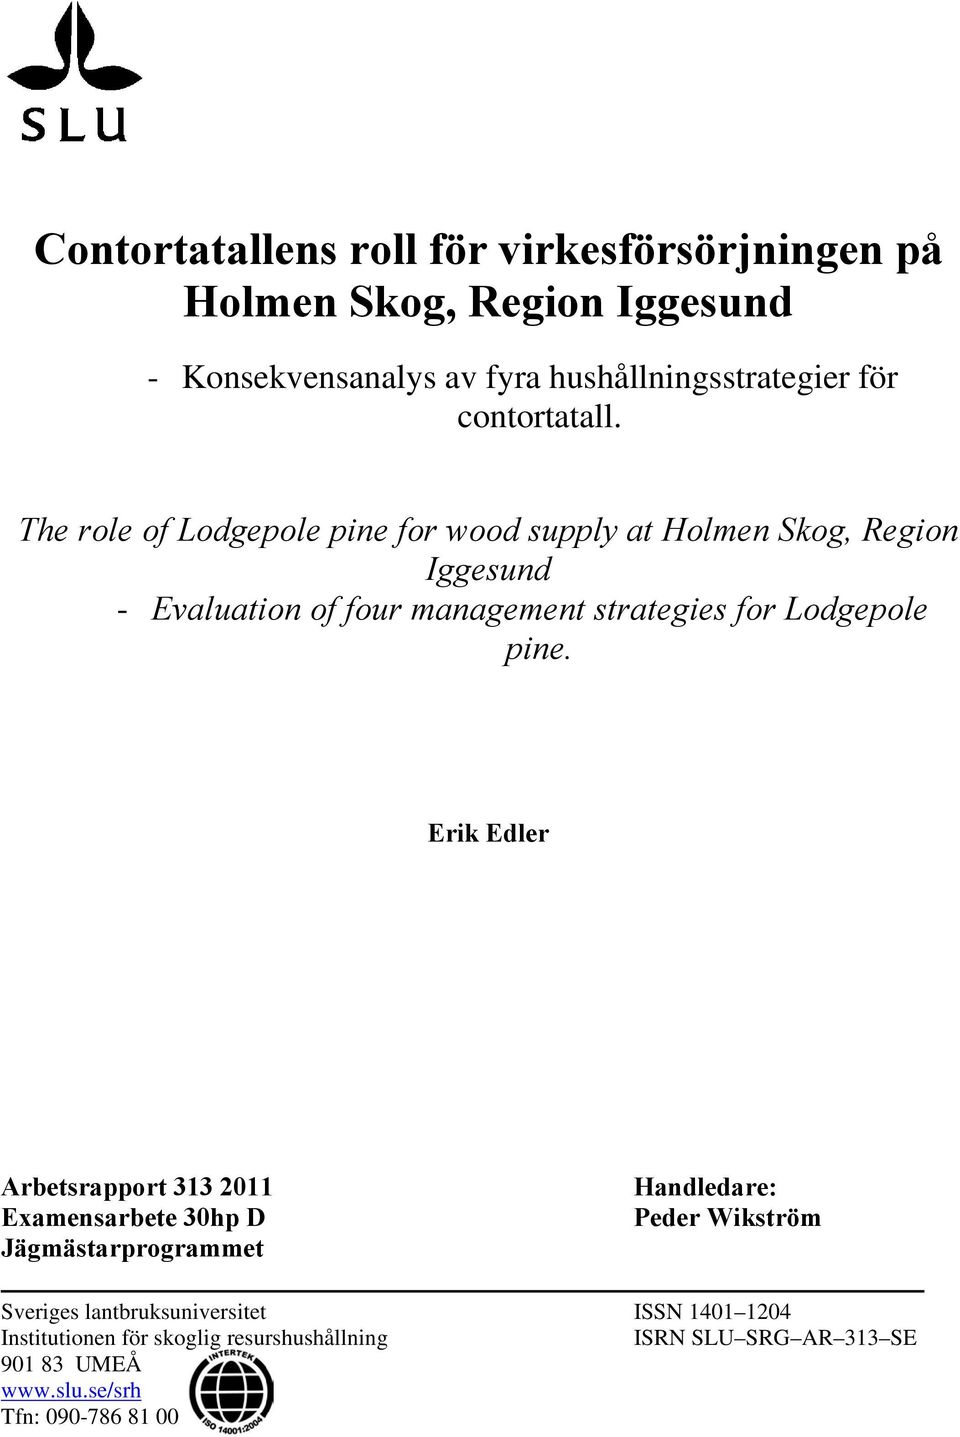 The role of Lodgepole pine for wood supply at Holmen Skog, Region Iggesund - Evaluation of four management strategies for Lodgepole